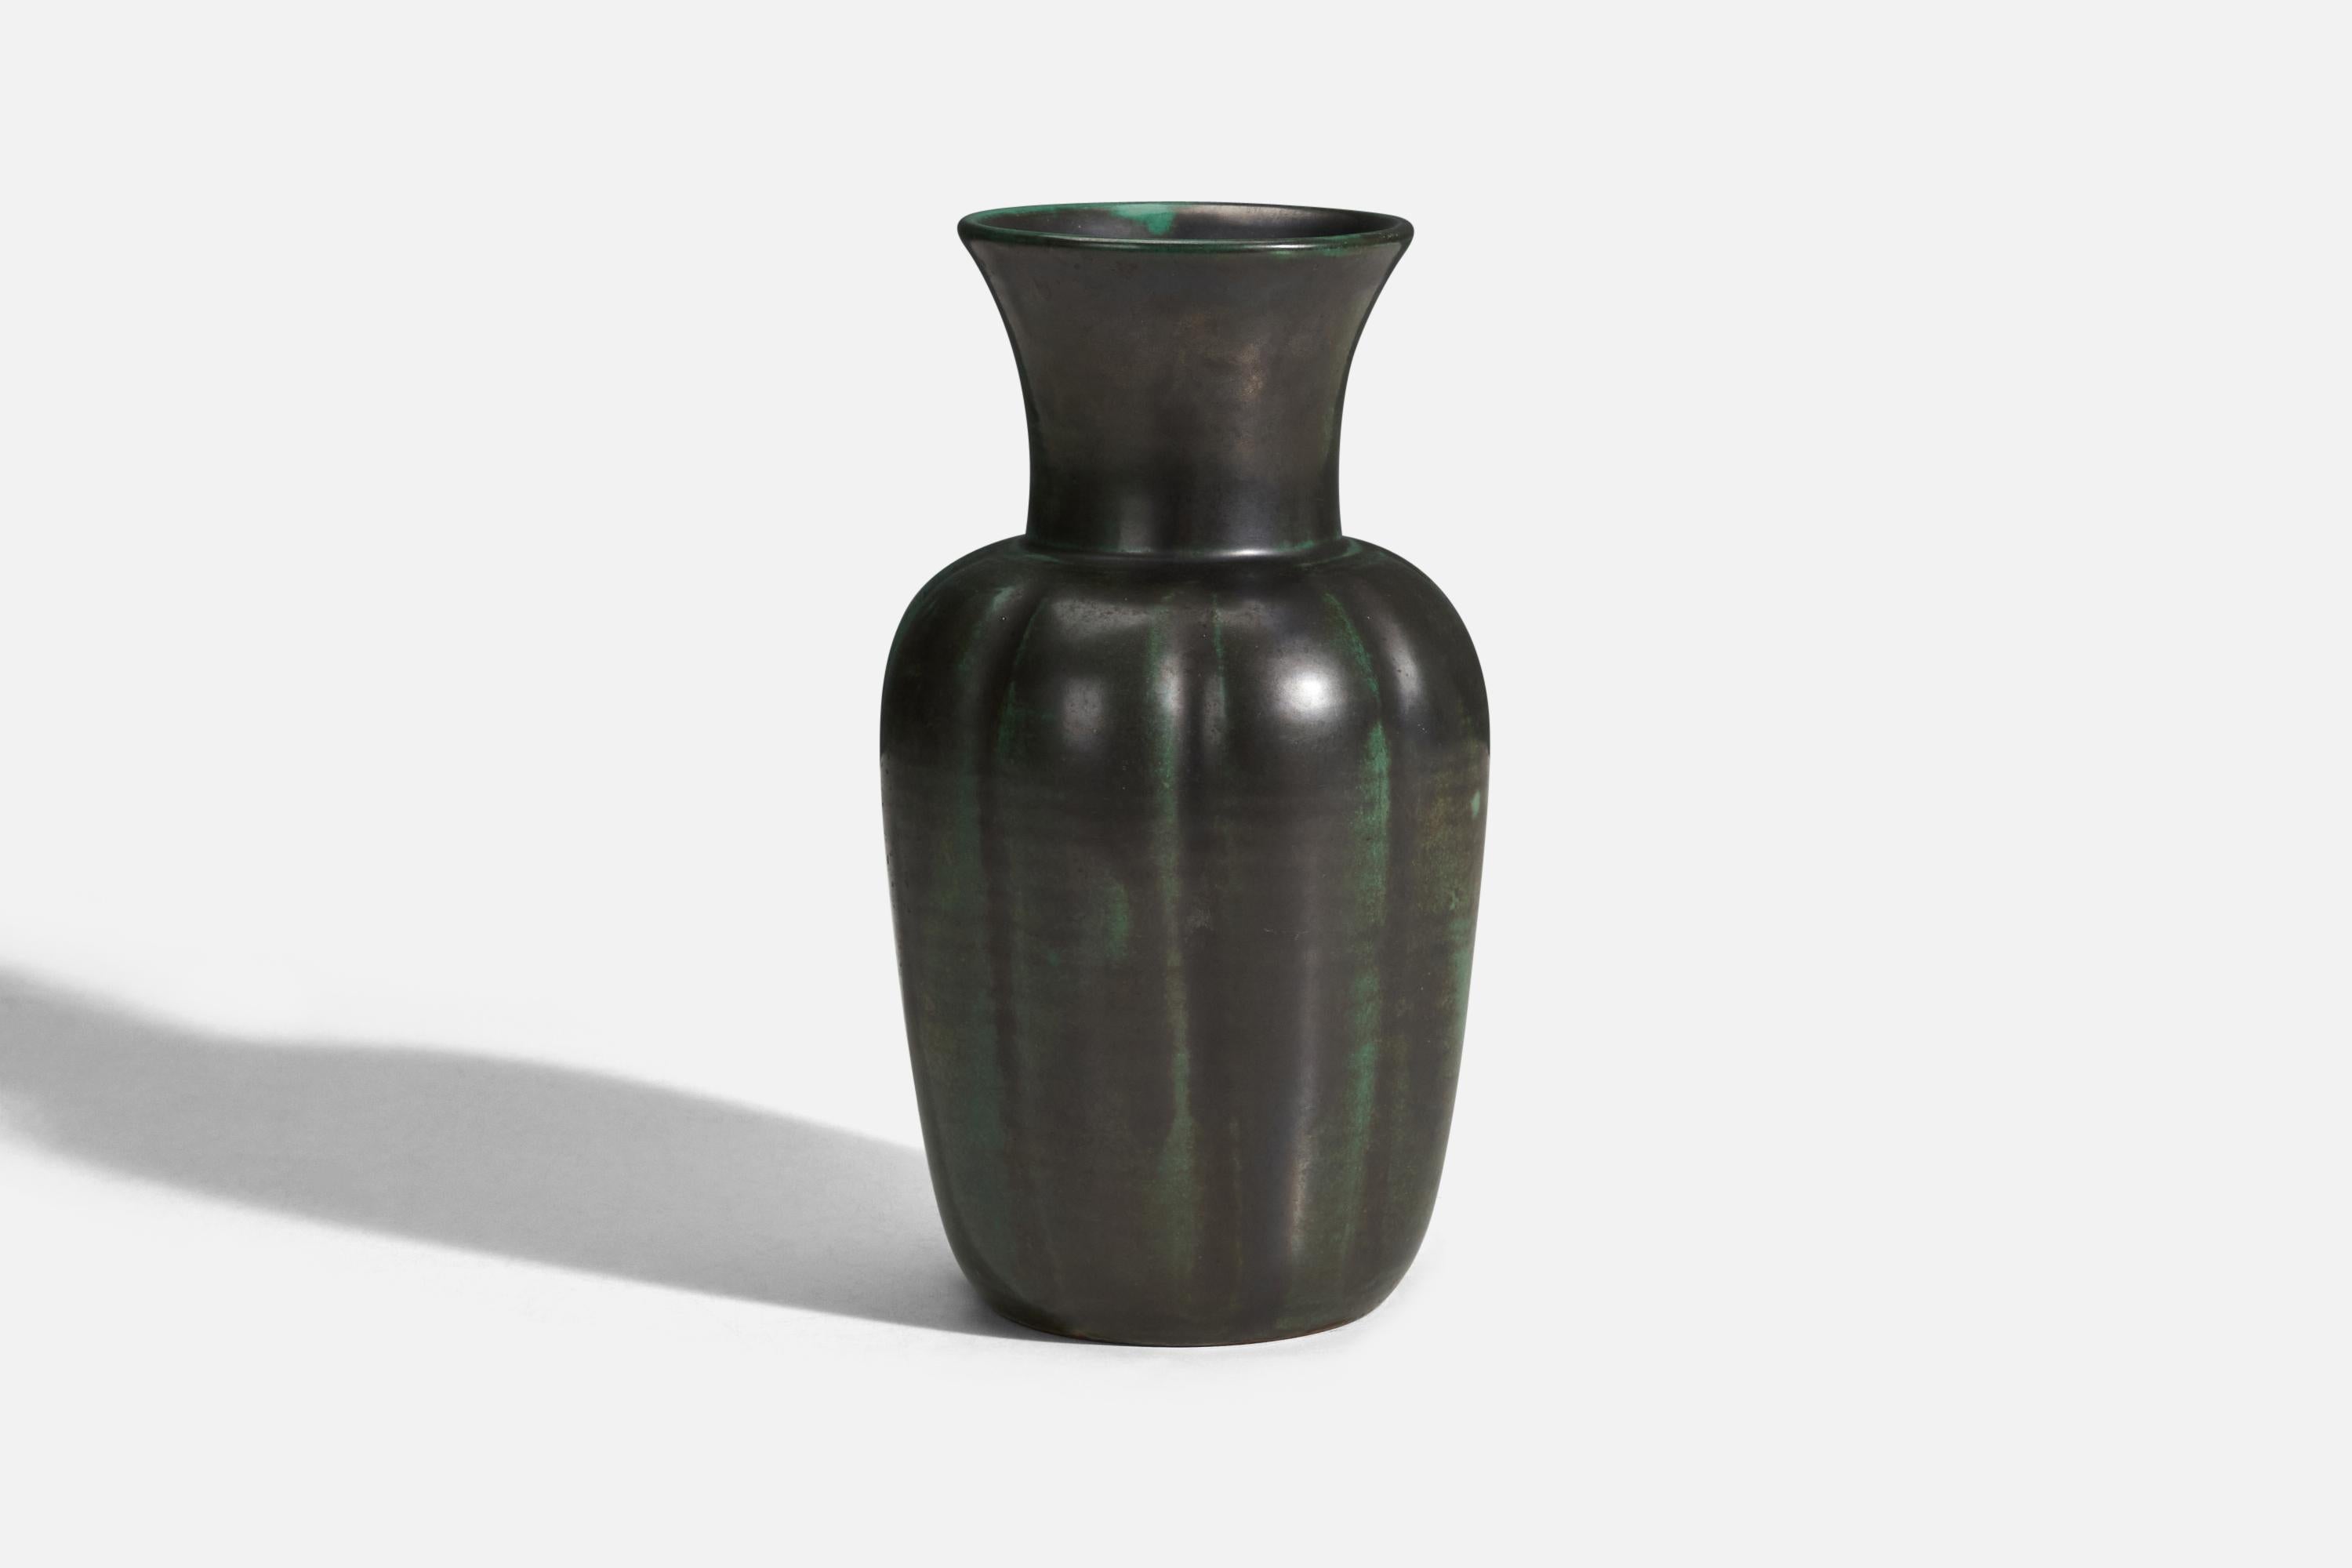 A green and black glazed earthenware vase designed and produced by Upsala-Ekeby, Sweden, 1940s.